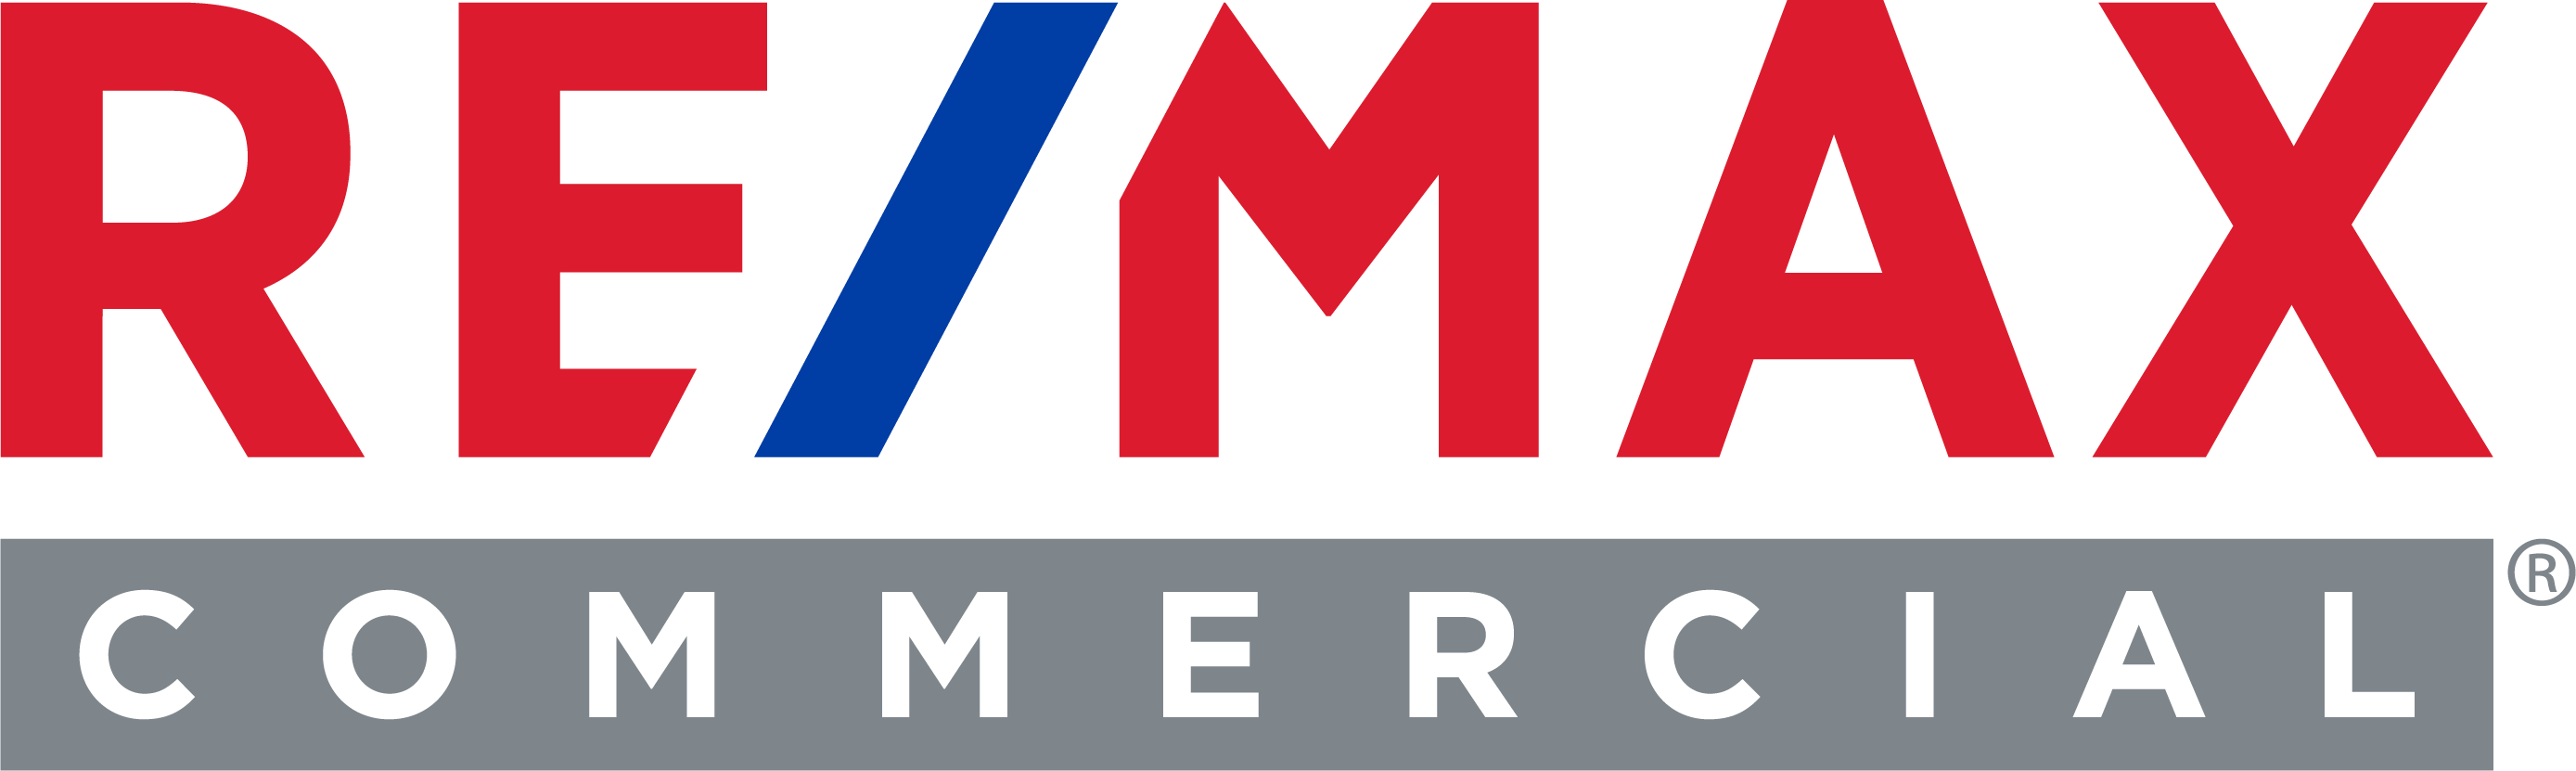 remax site logo